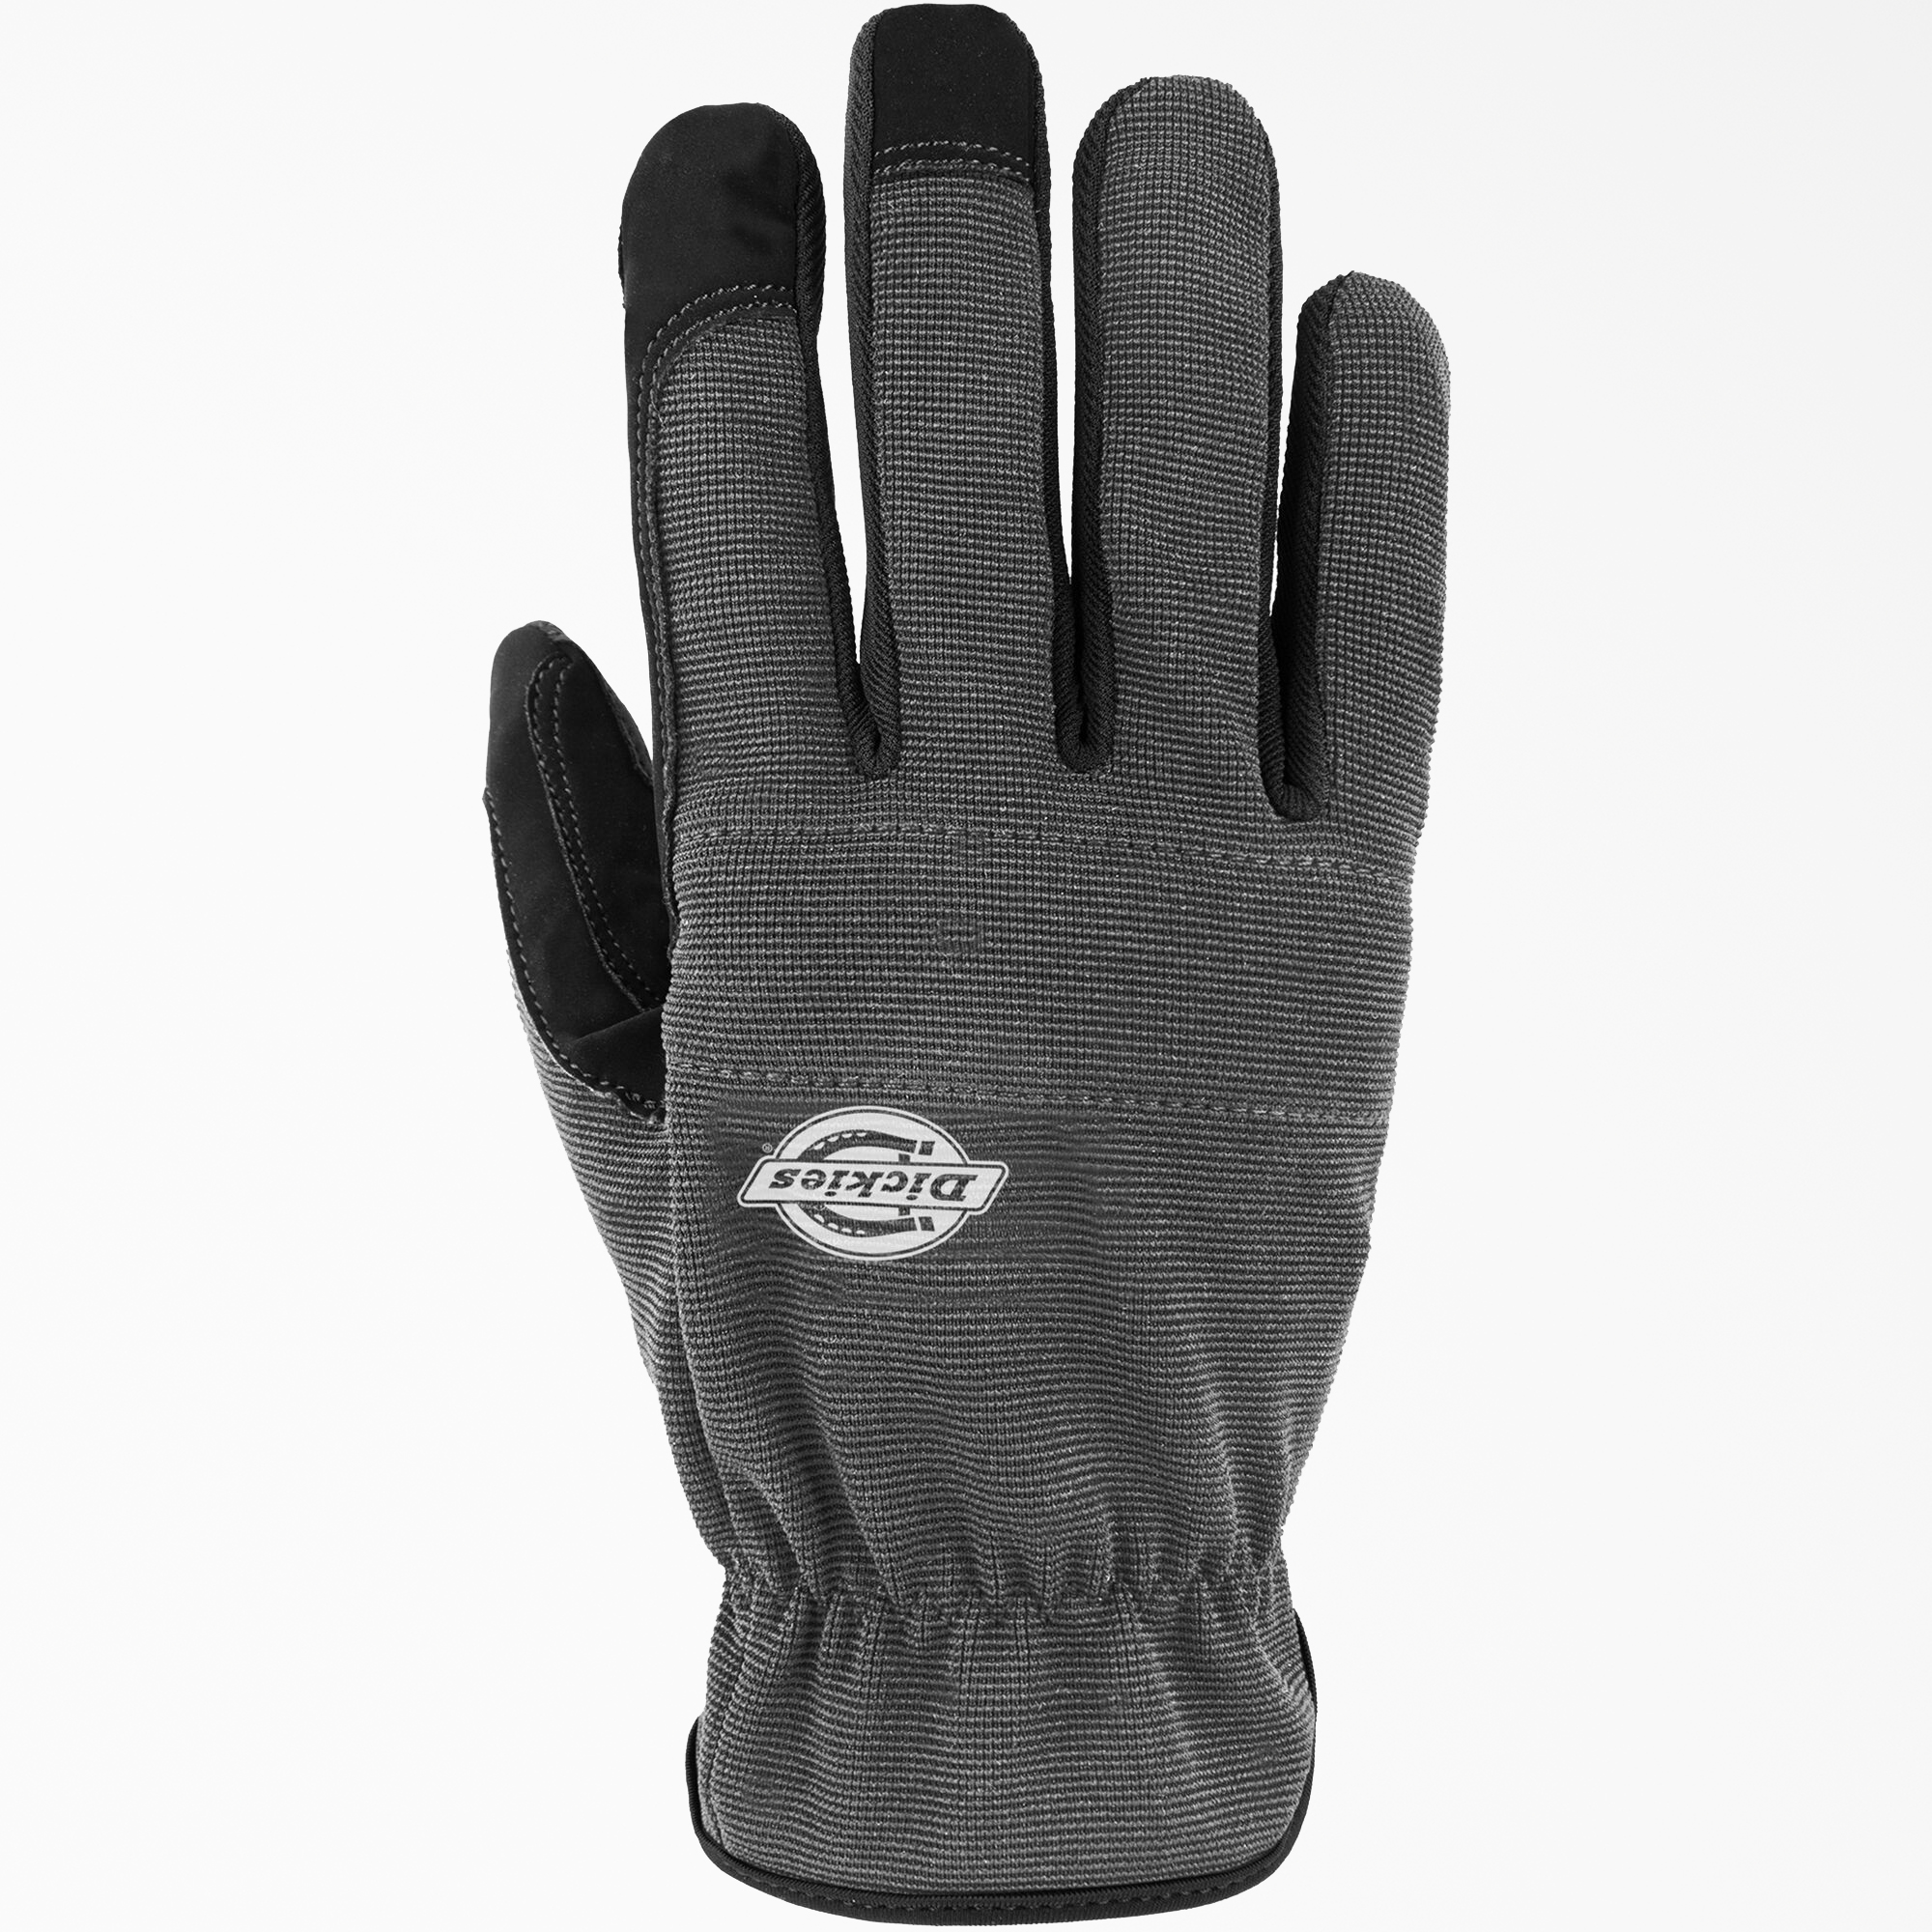 Multi-Purpose Work Gloves, Multi-Pack - Black (BK)